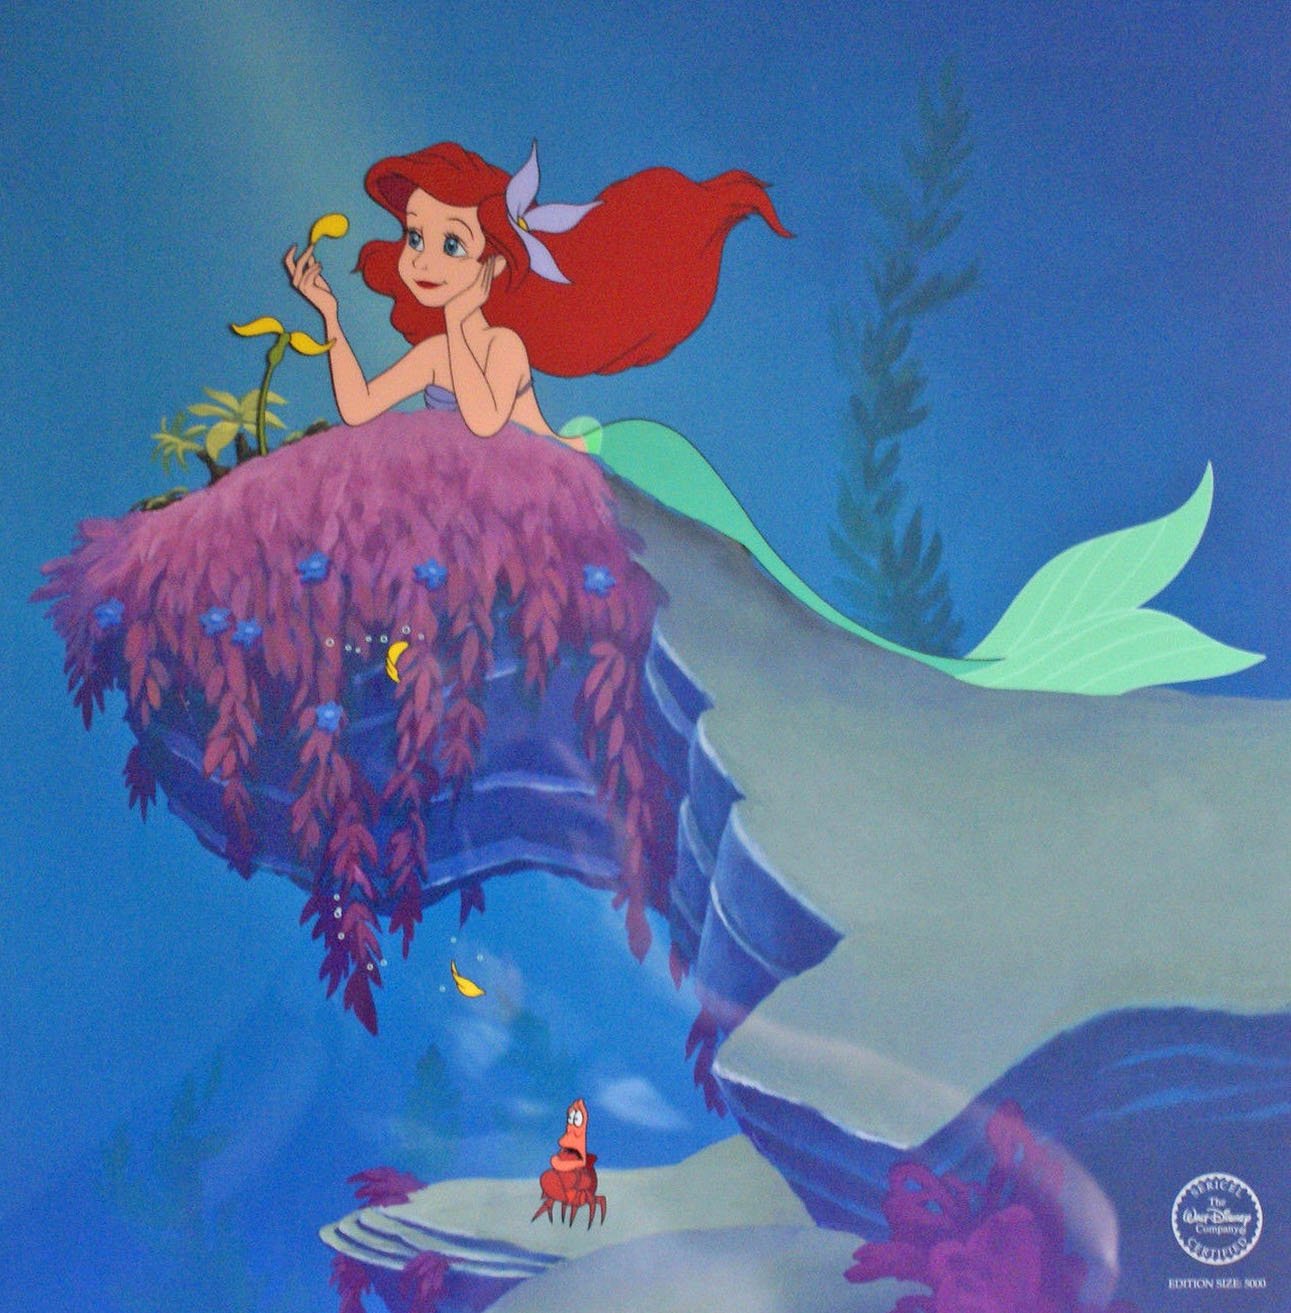 Original Walt Disney Limited Edition Sericel fro the Little Mermaid